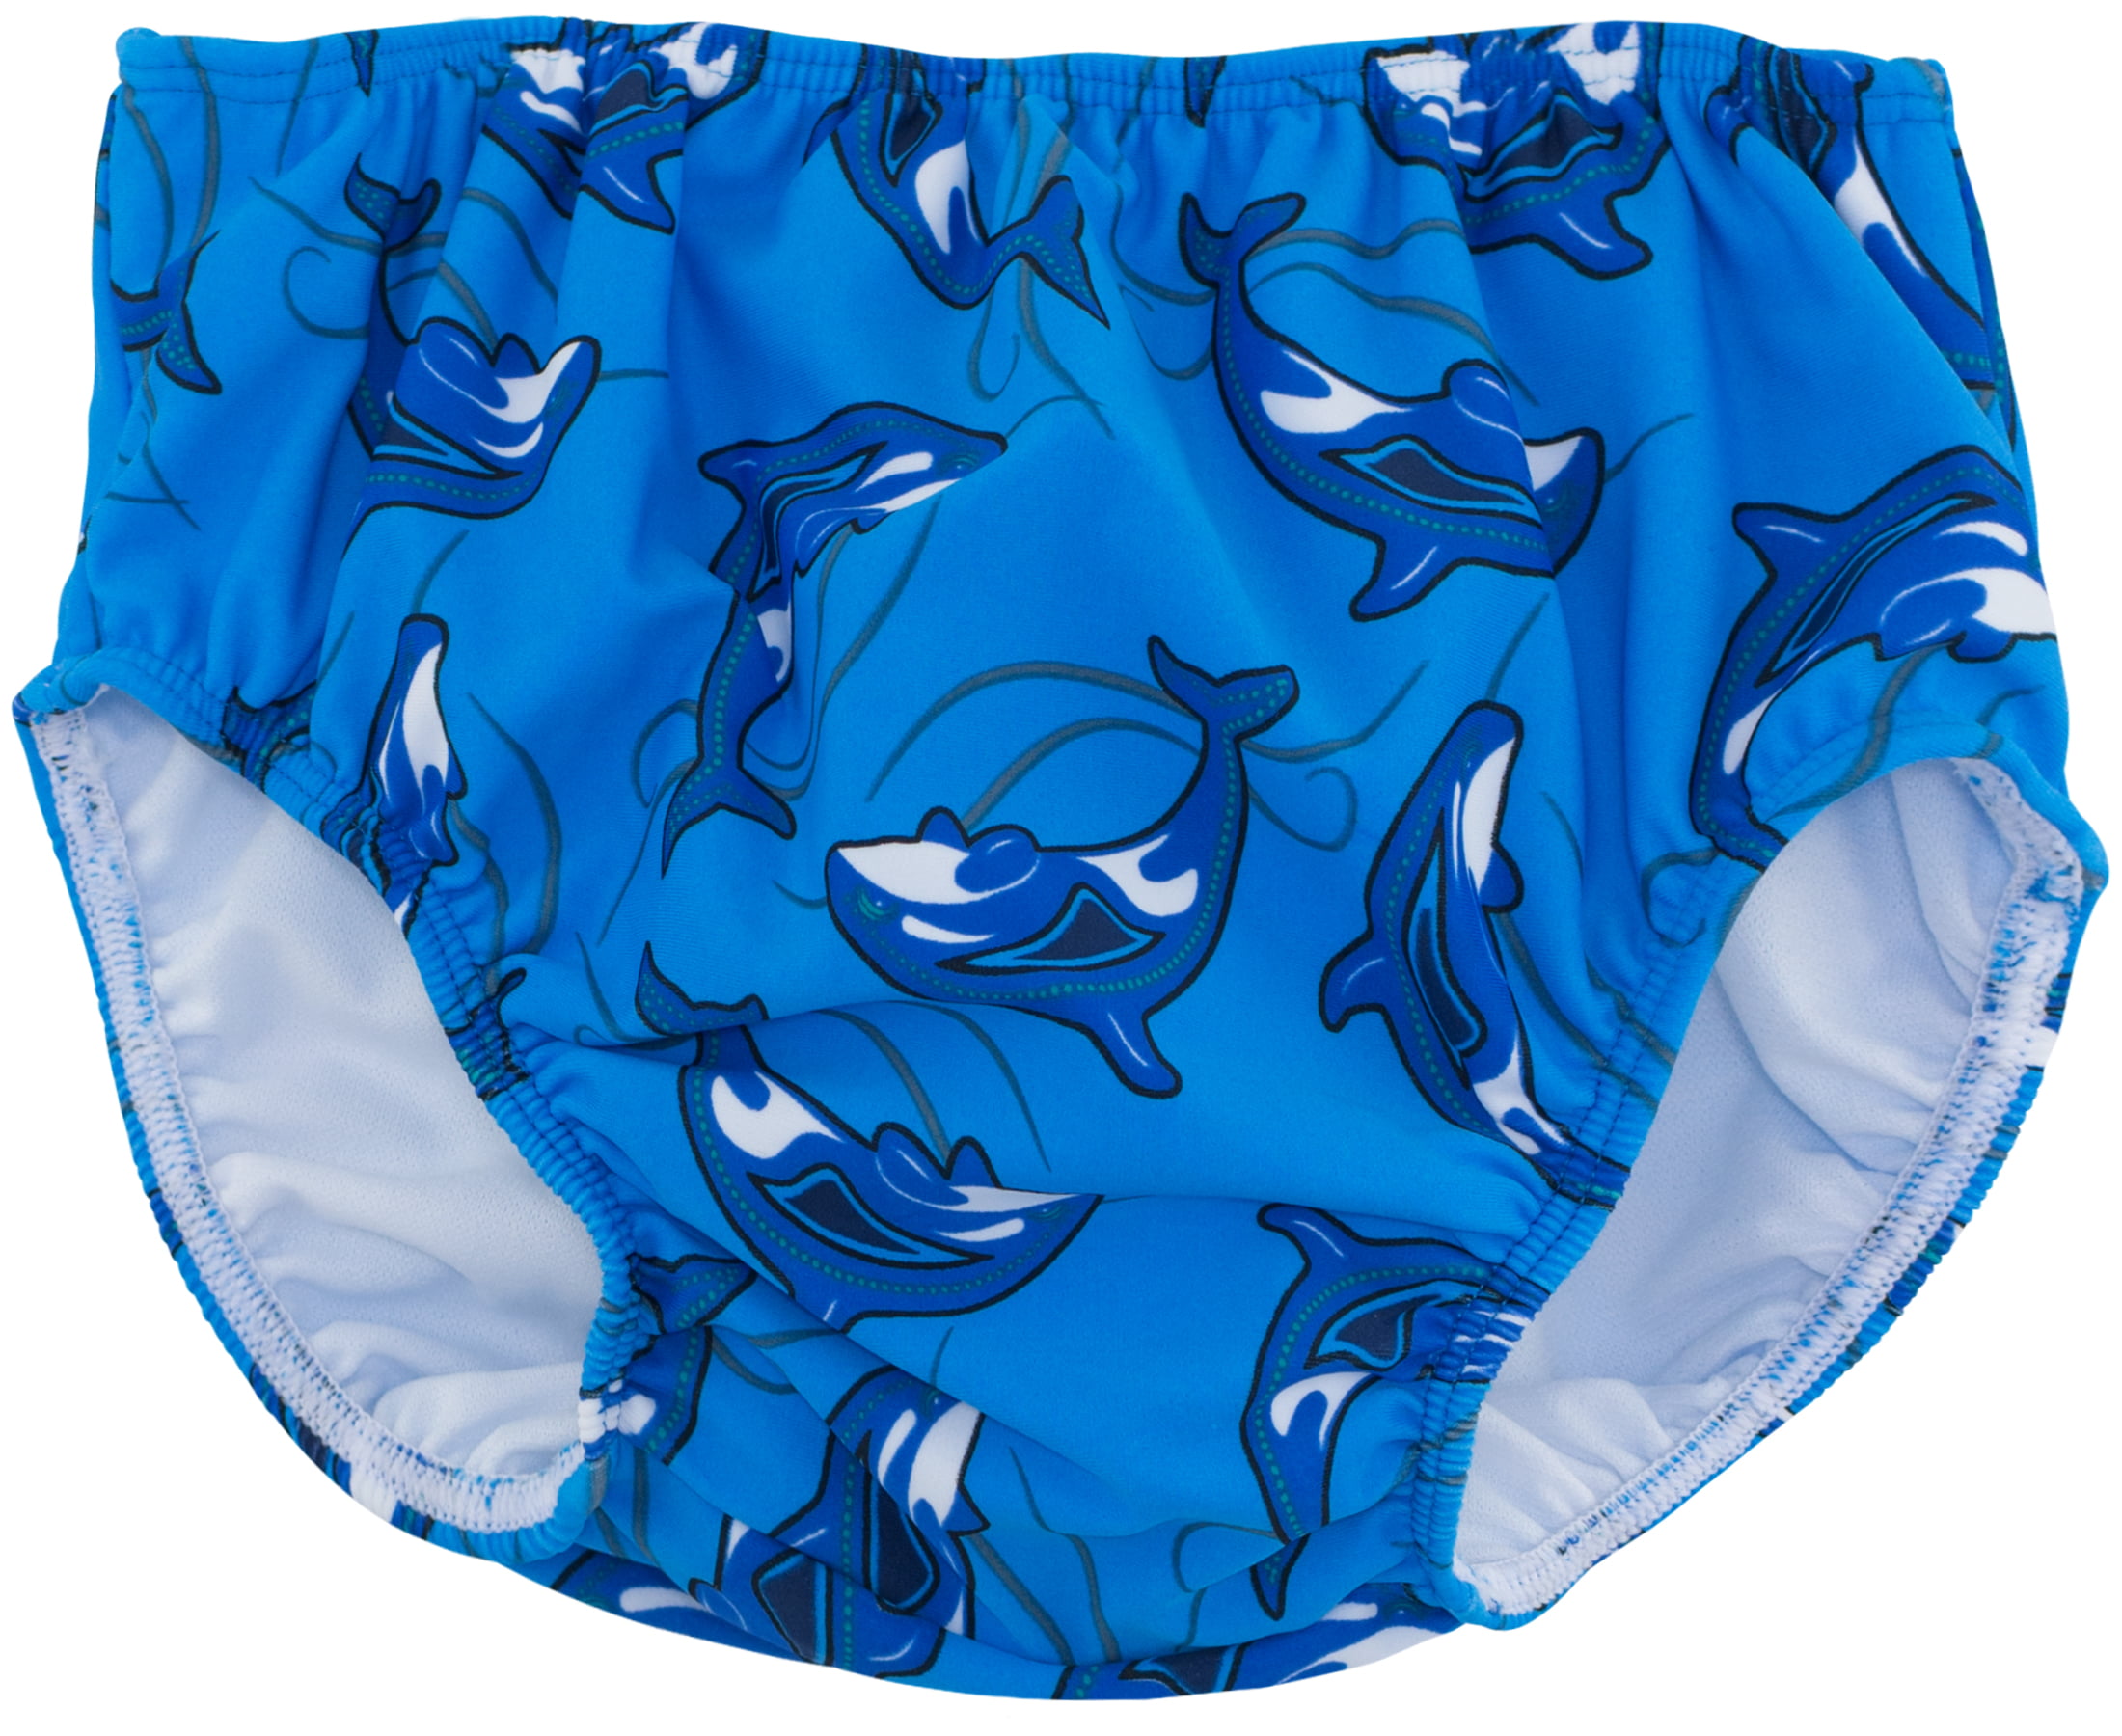 Orange Shark/Surfboard Swim Time Baby Boys Reusable Swim Diaper UPF 50 with Side Snaps Briefs L 12-18 Months